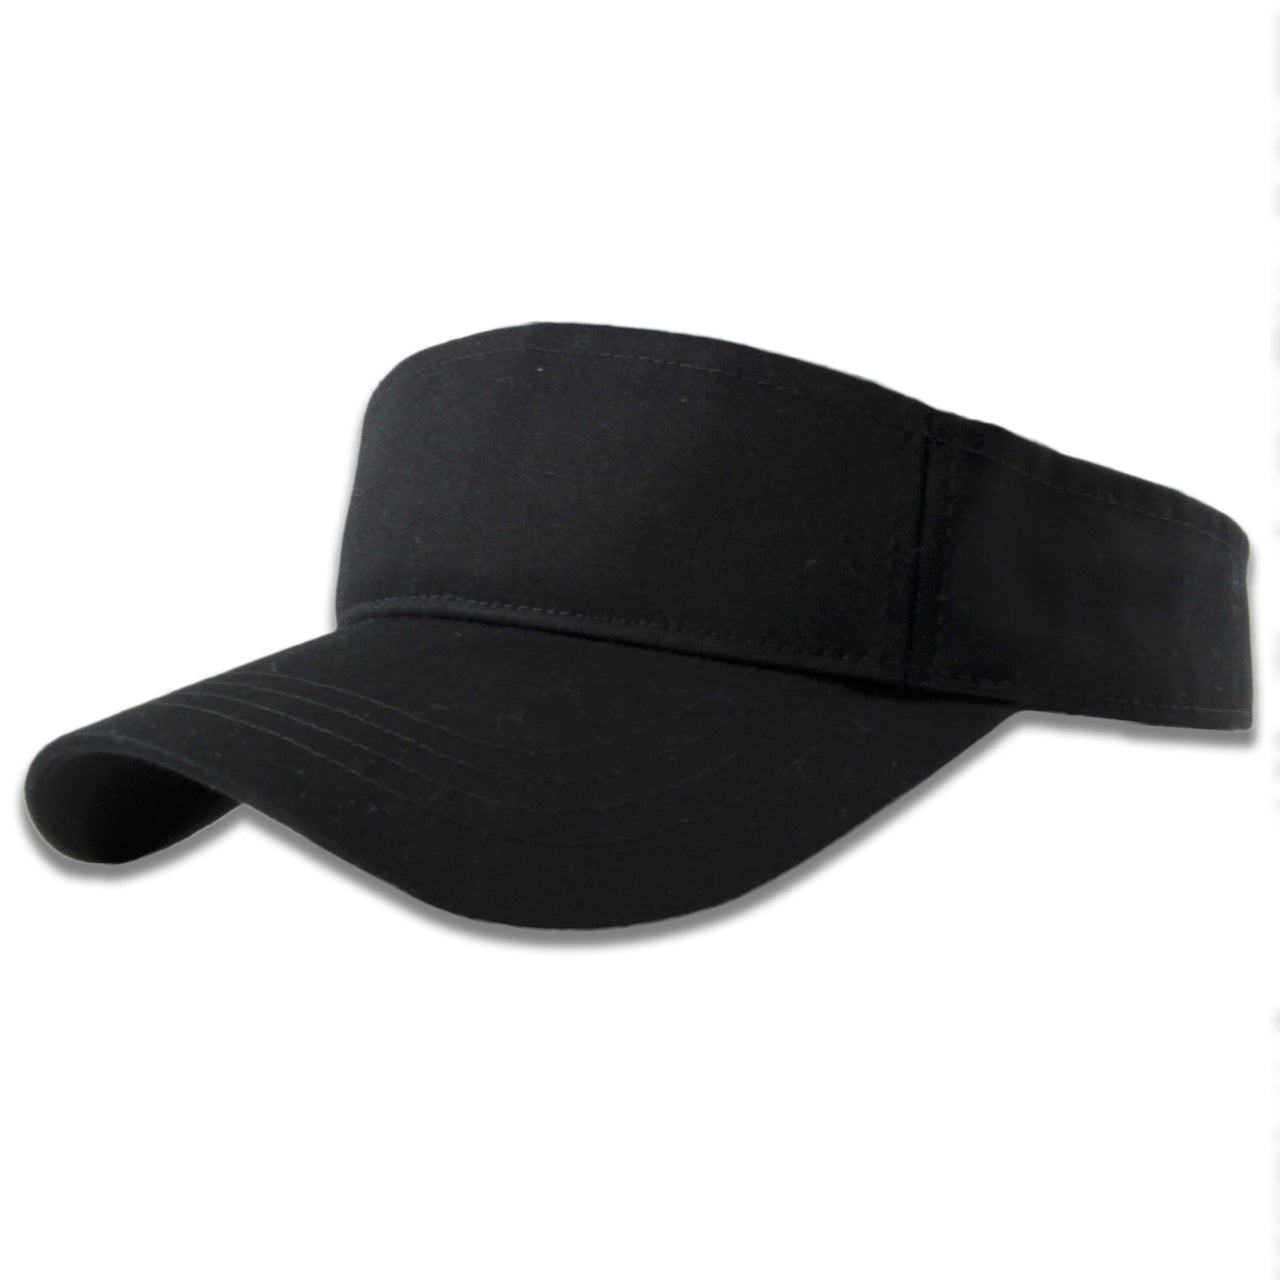 The black adjustable blank visor fits all head sizes